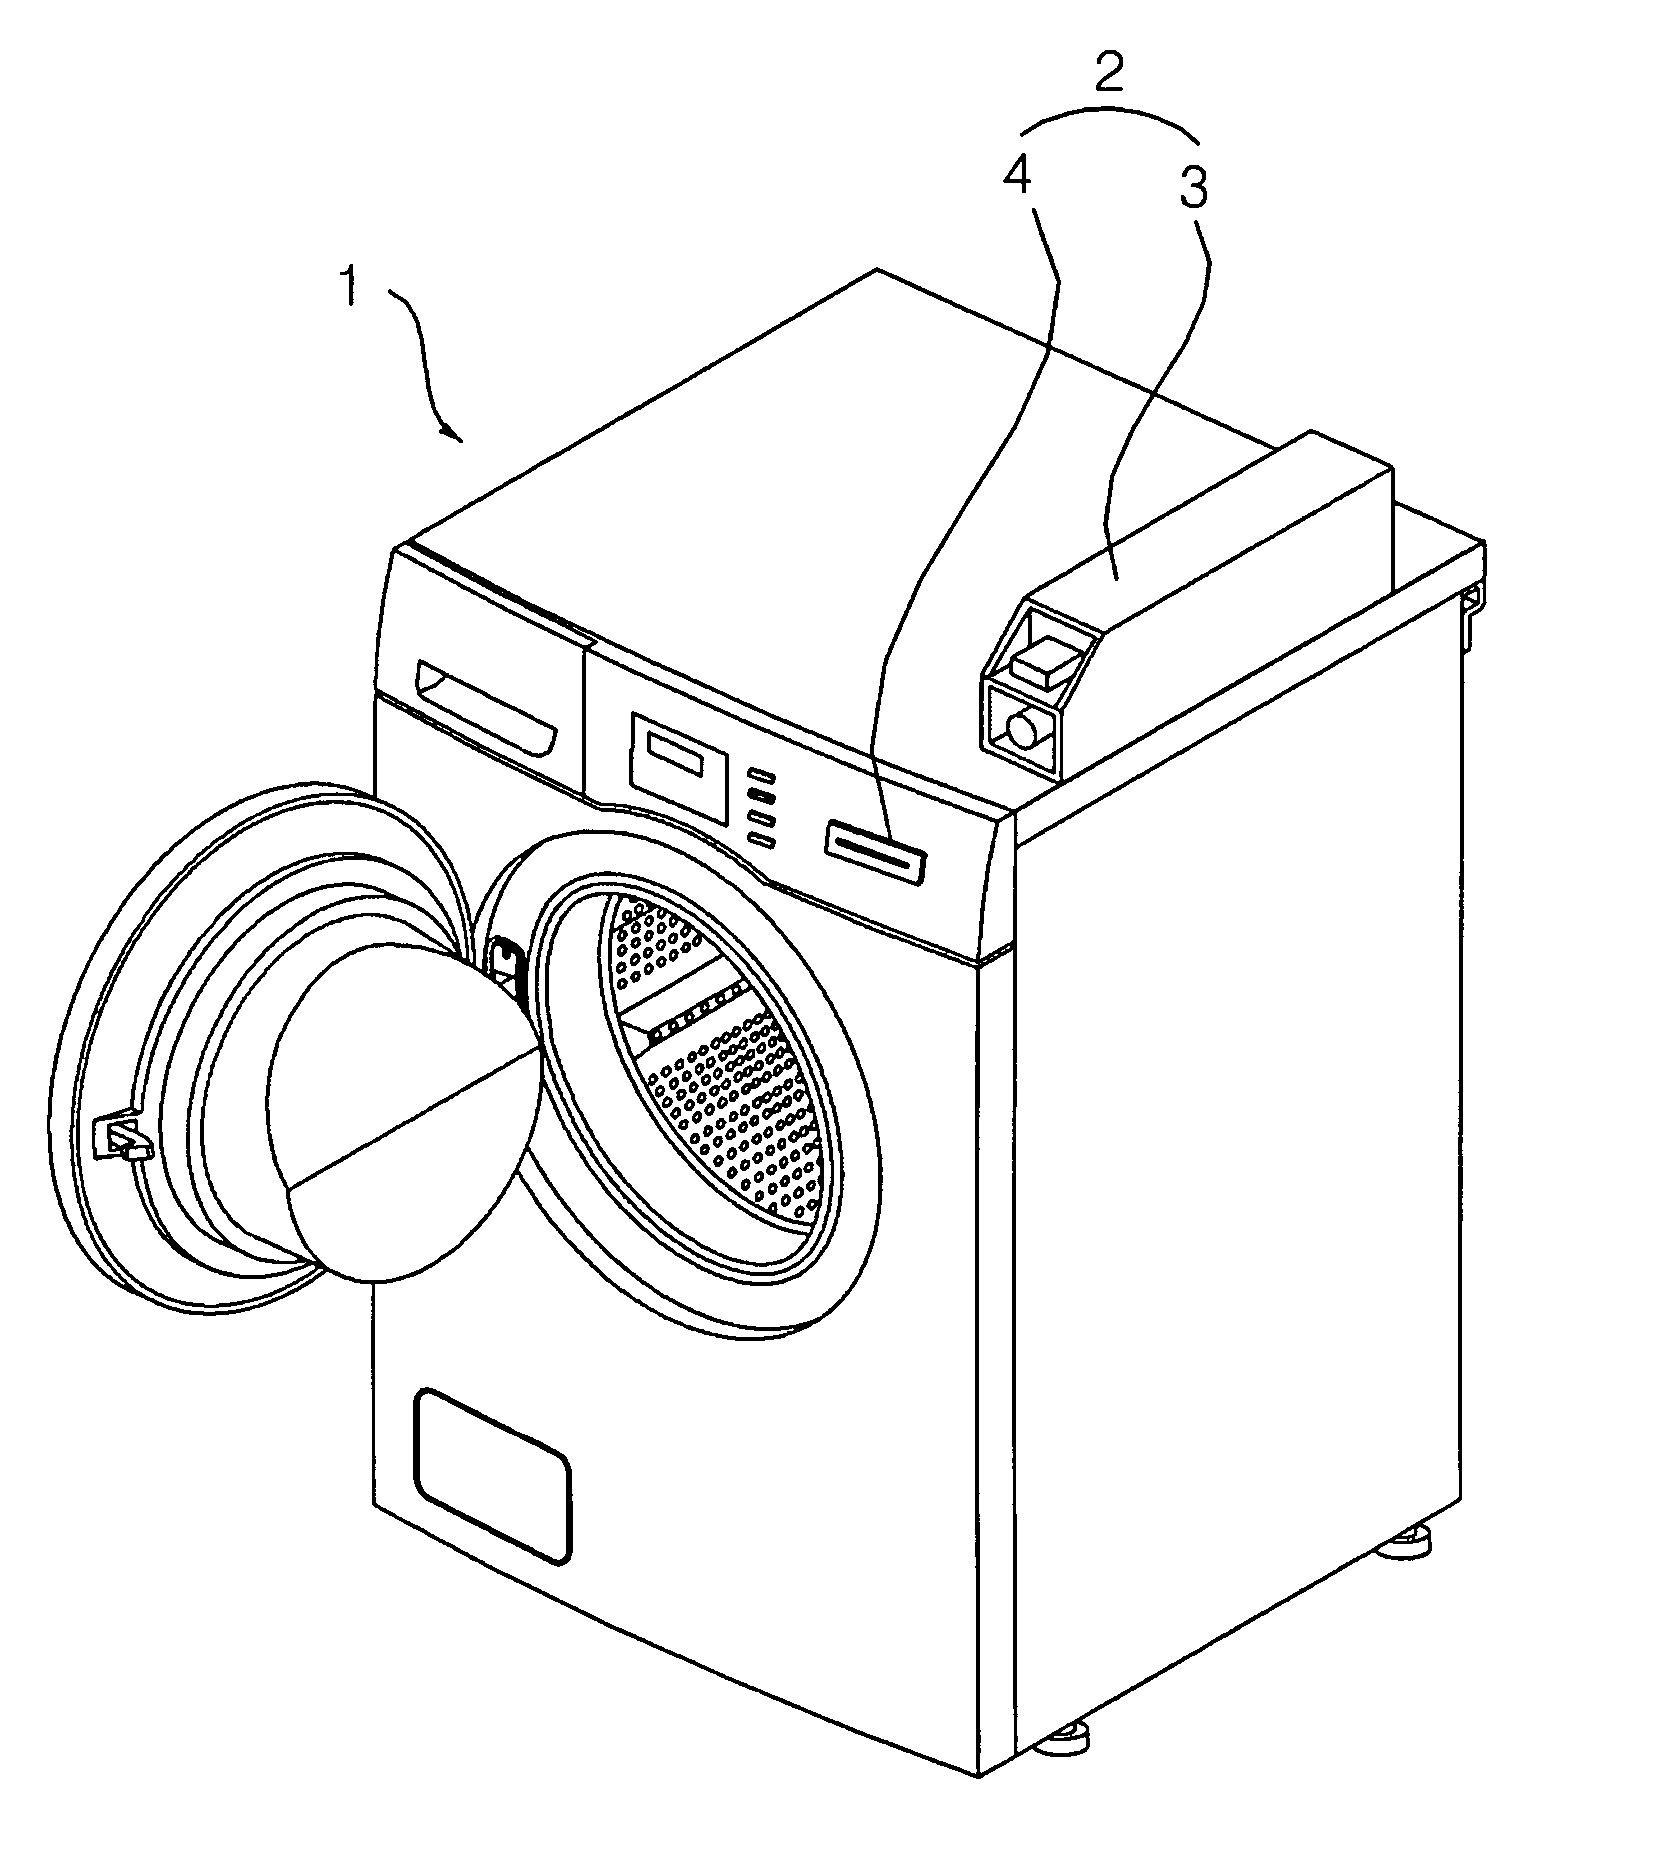 Detergent supplying apparatus of washing machine